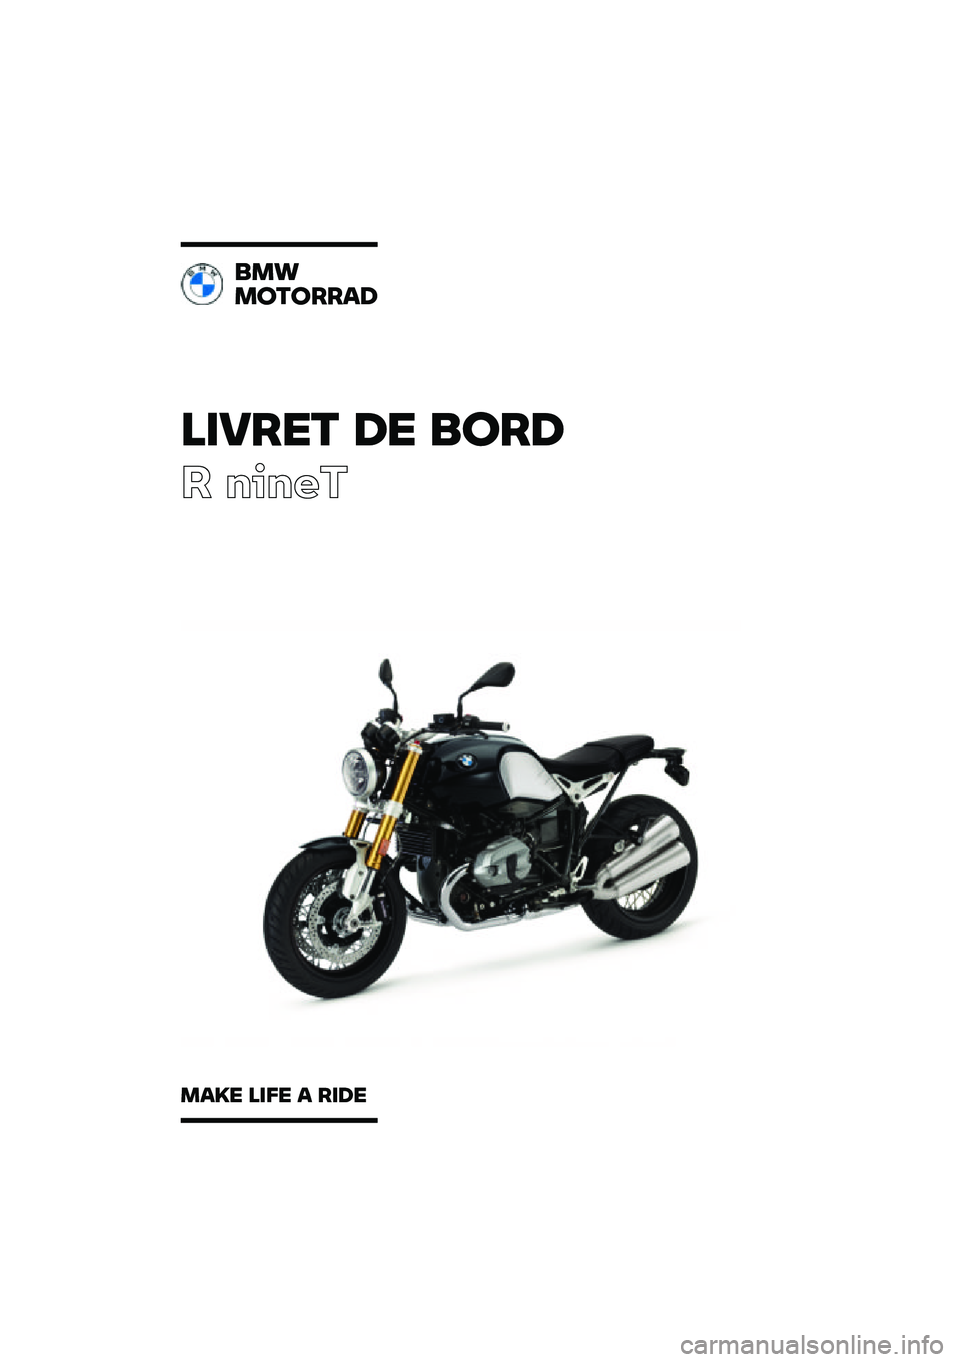 BMW MOTORRAD R NINE T 2021  Livret de bord (in French) ������ �\b� �	�
��\b
� �����
�	��\f
��
��
���
�\b
��
�� ���� �
 ���\b� 